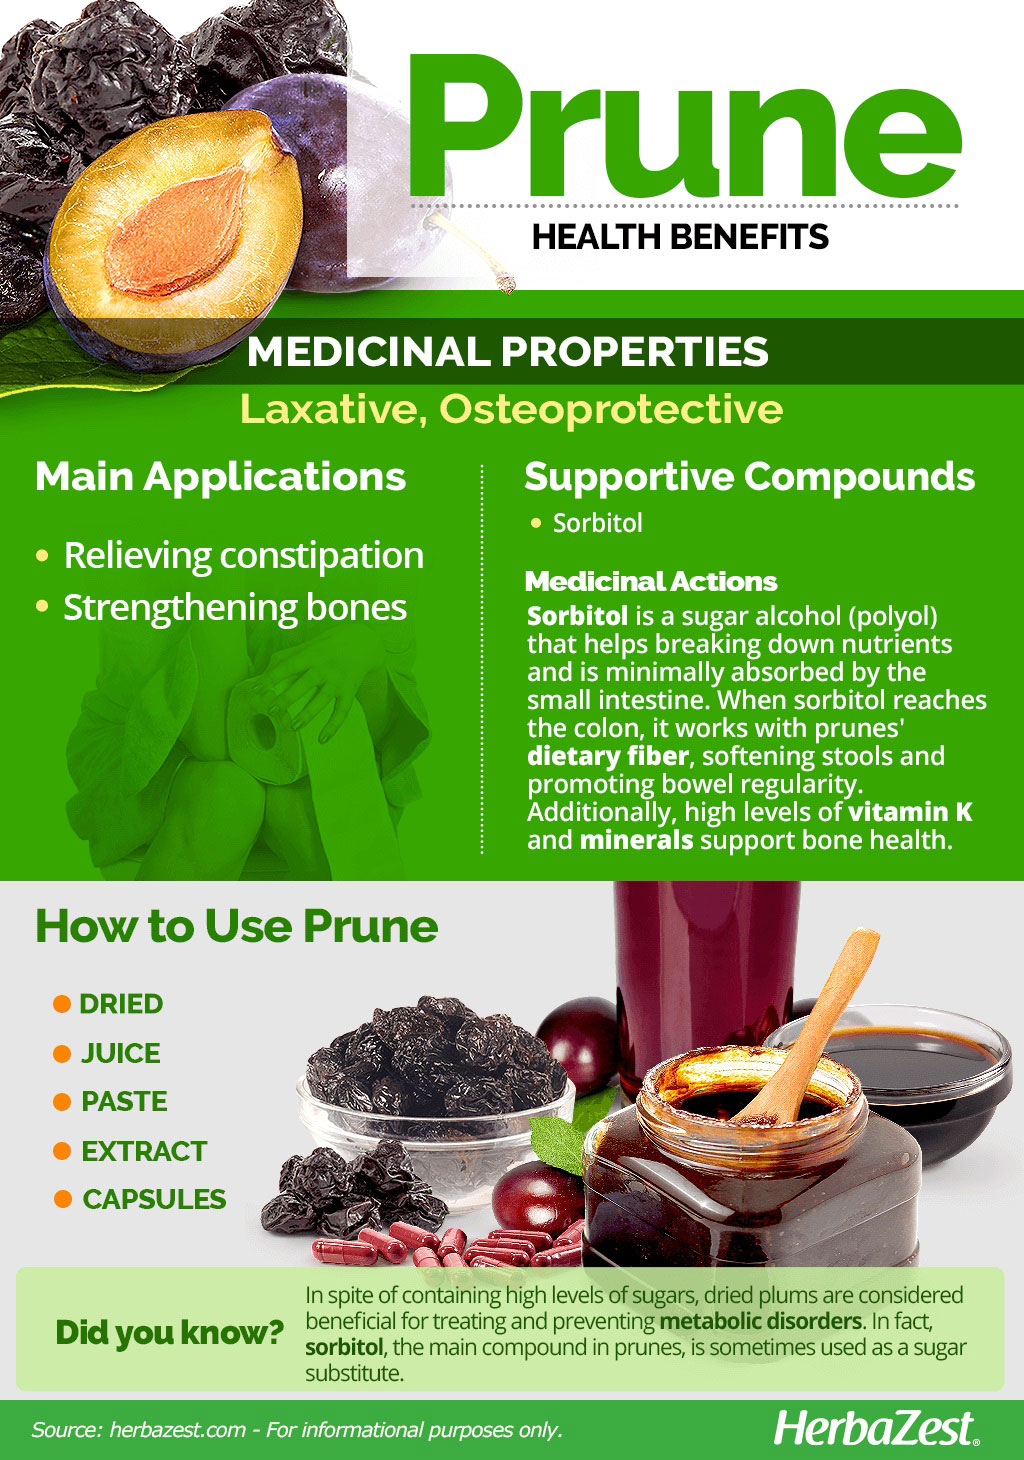 Prune Health Benefits Infographic